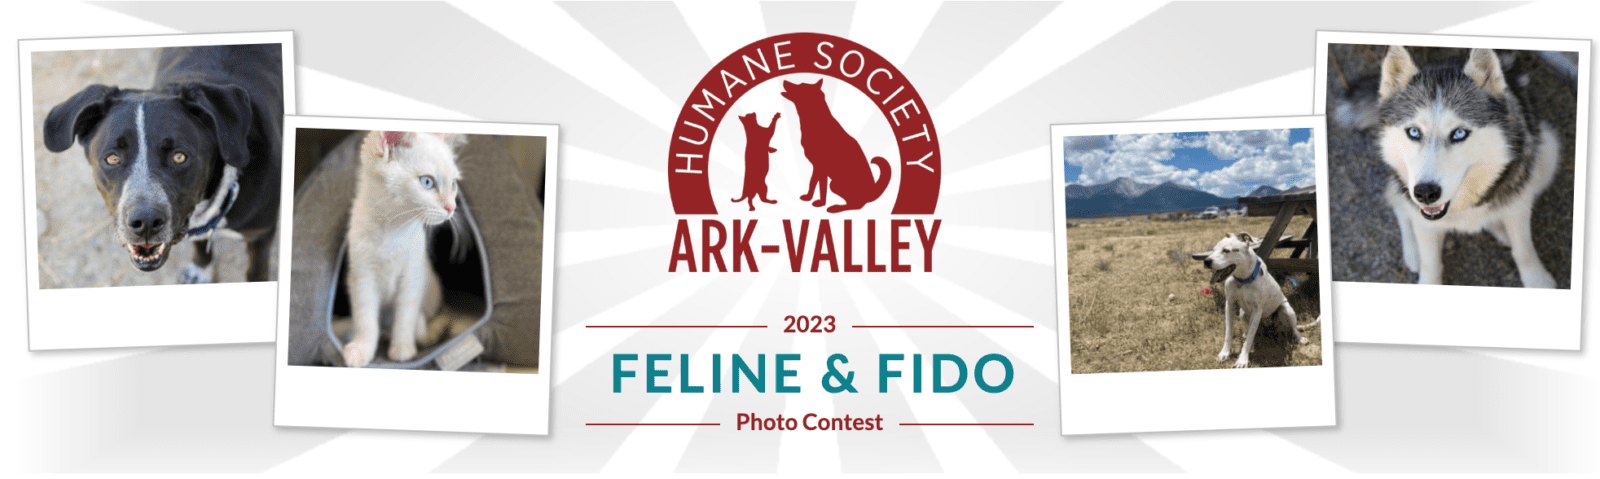 Feline & Fido Photo Contest & Fundraiser